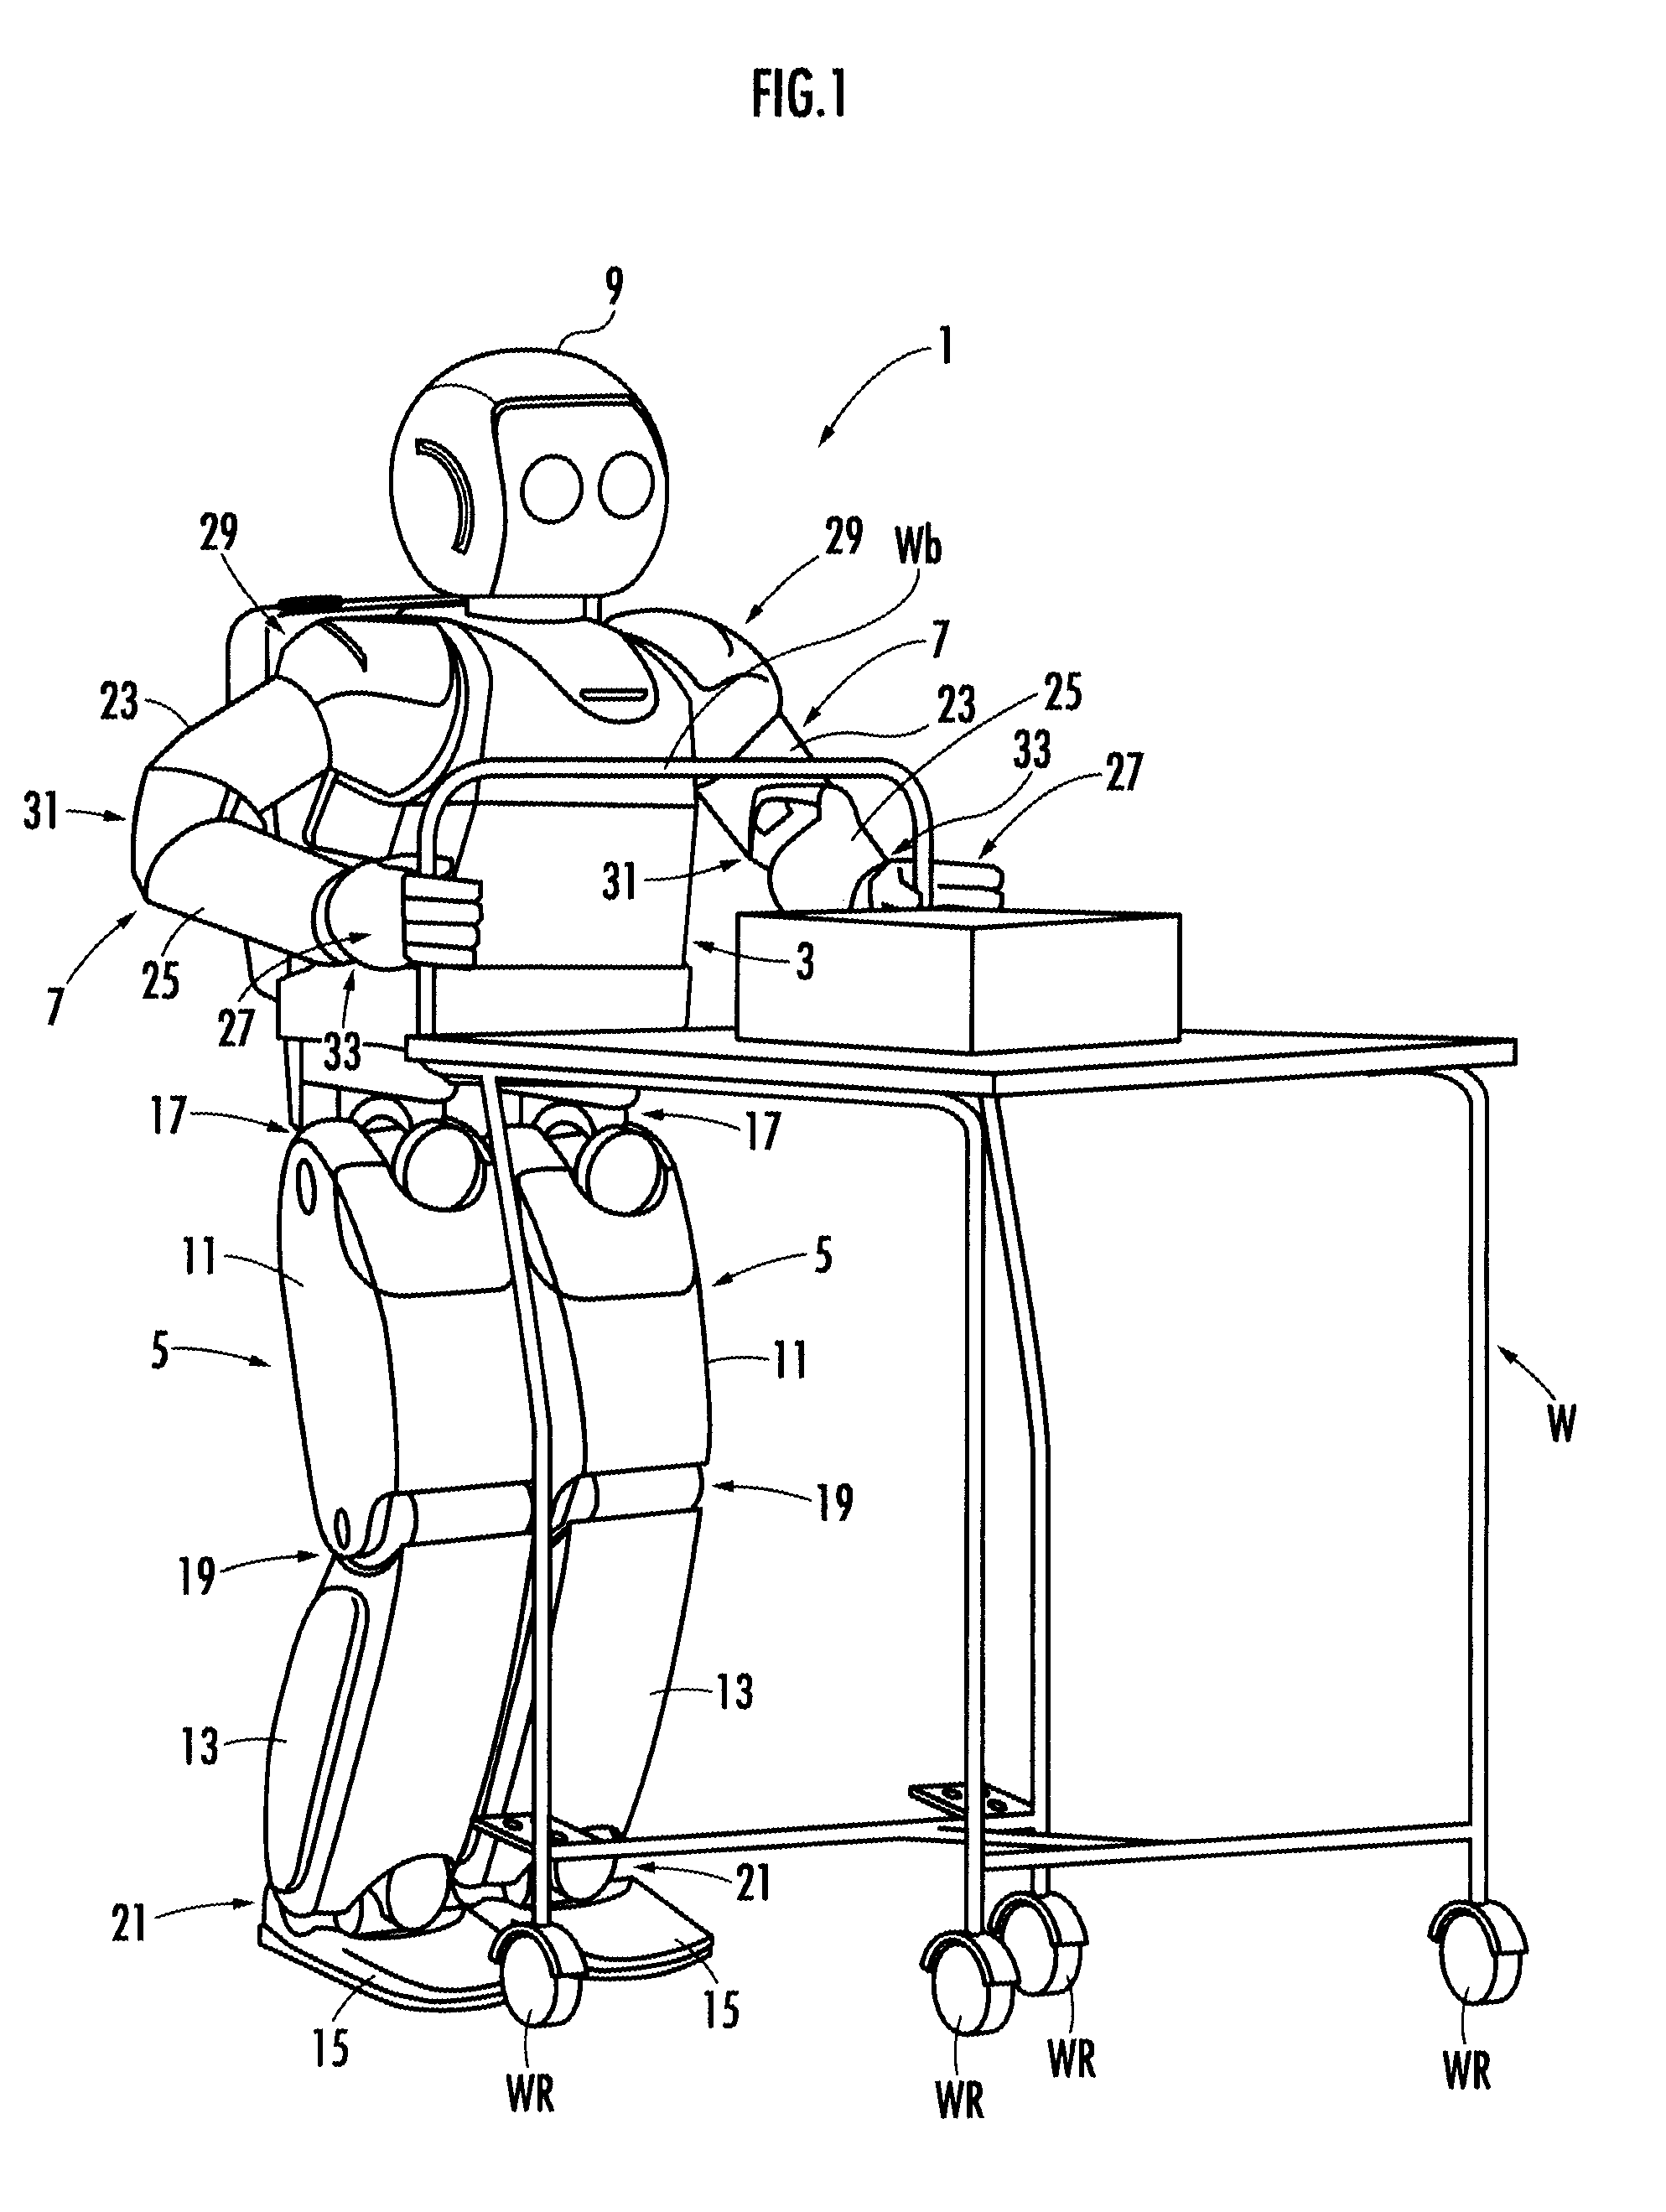 Controller of mobile robot